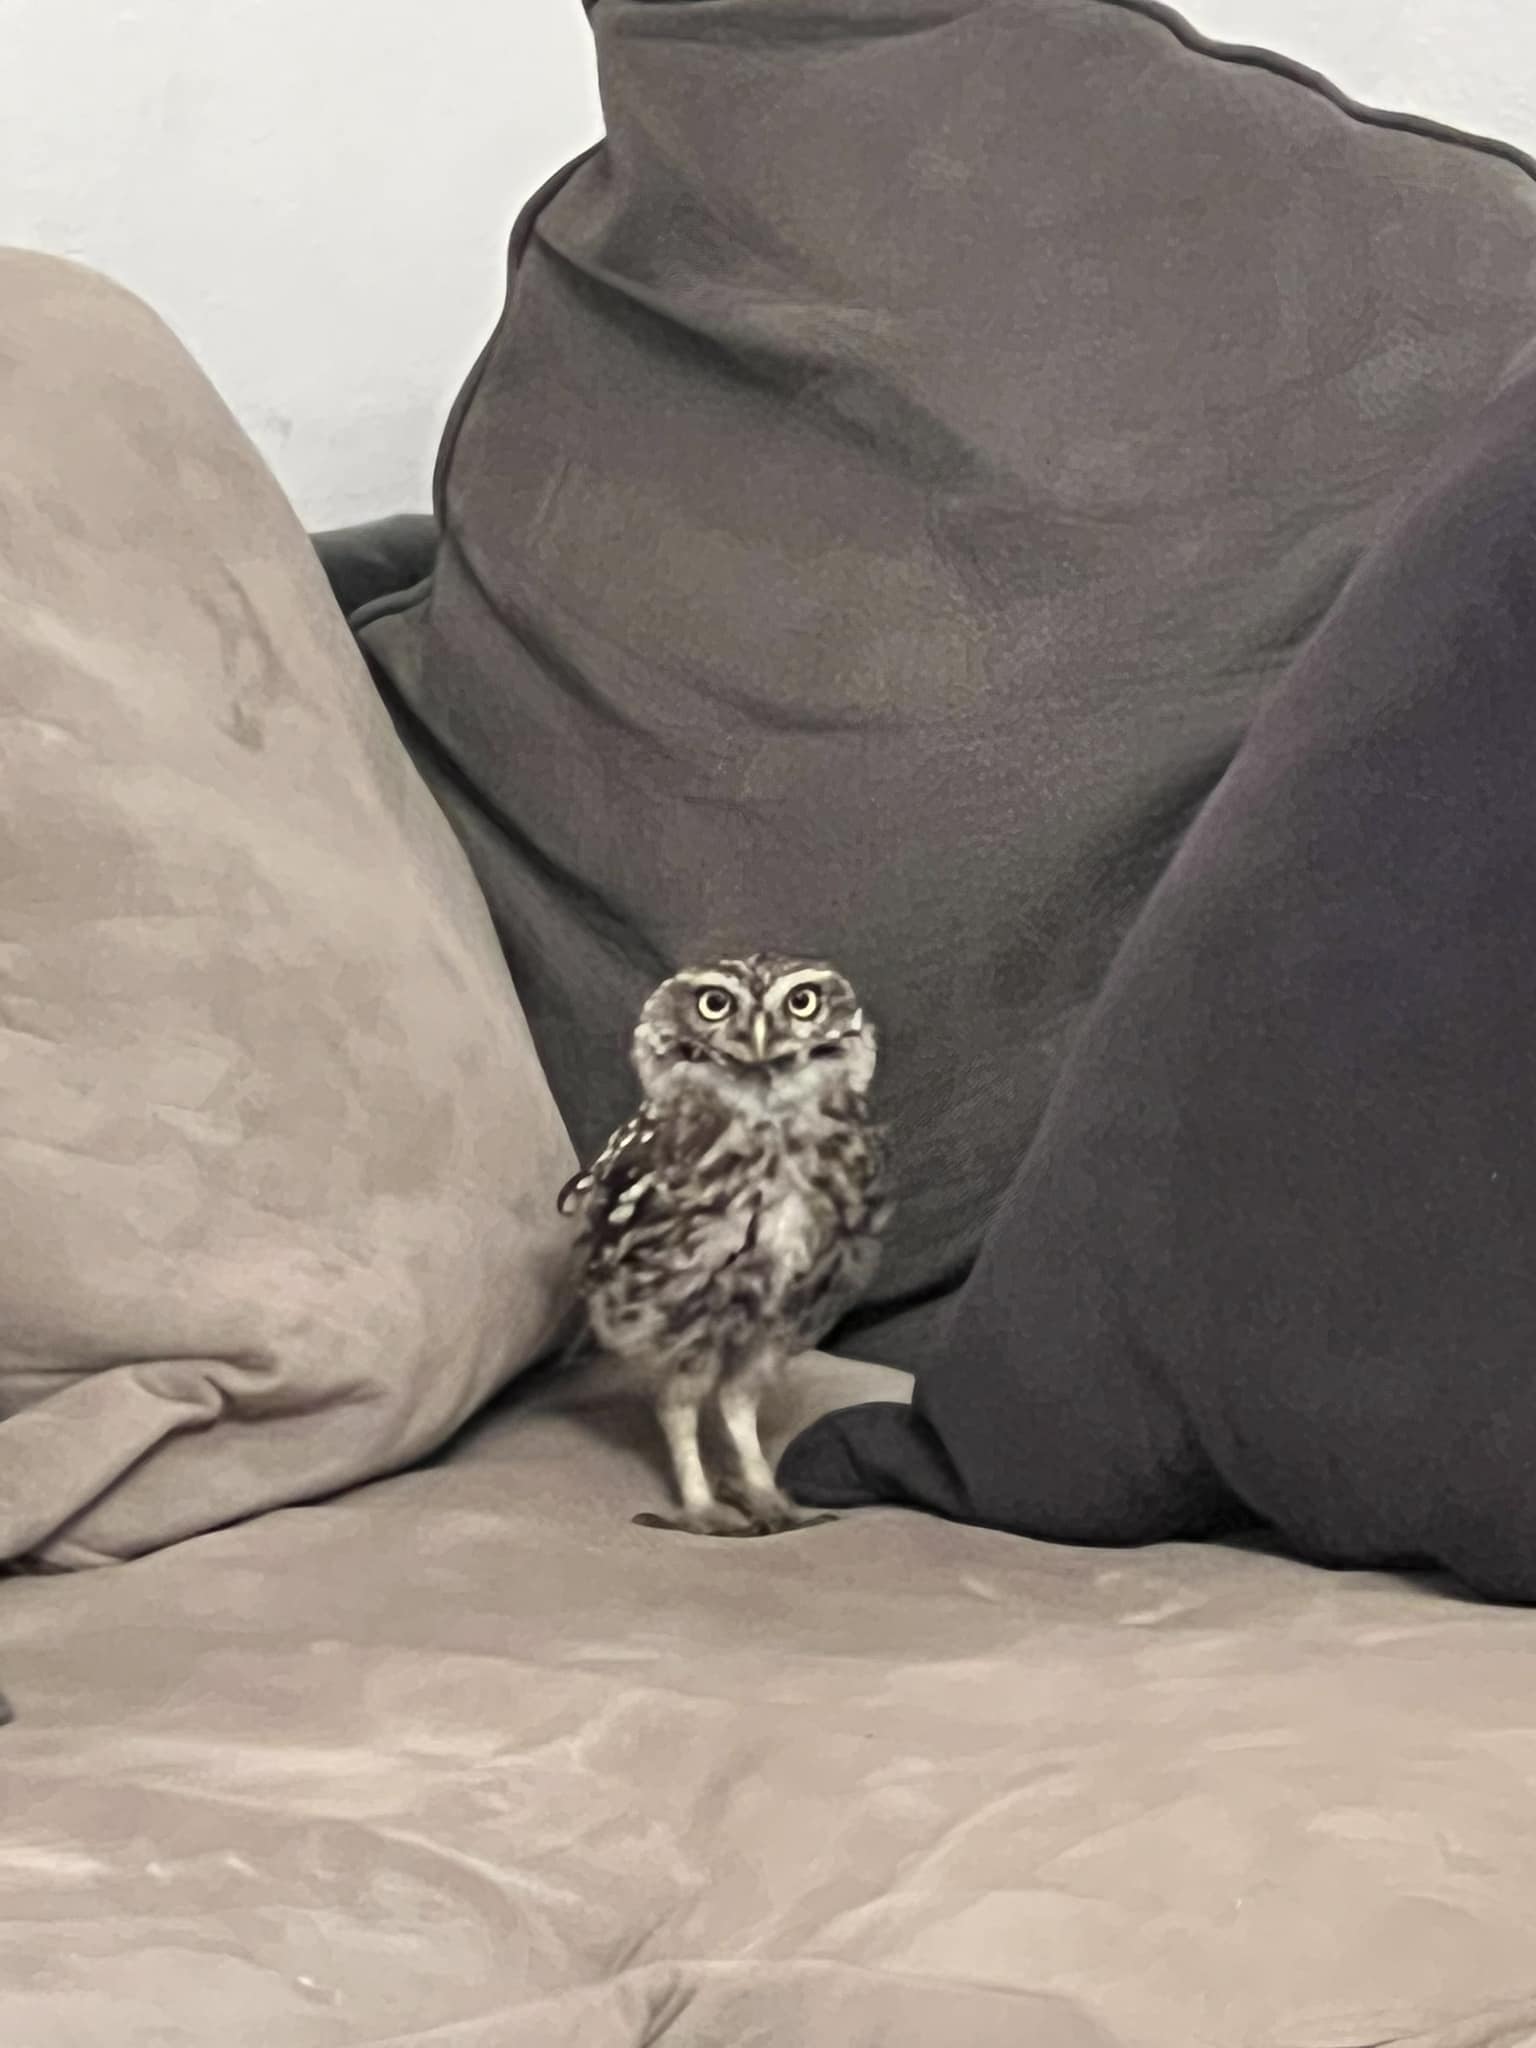 Mr. Hoot the owl sitting on a sofa